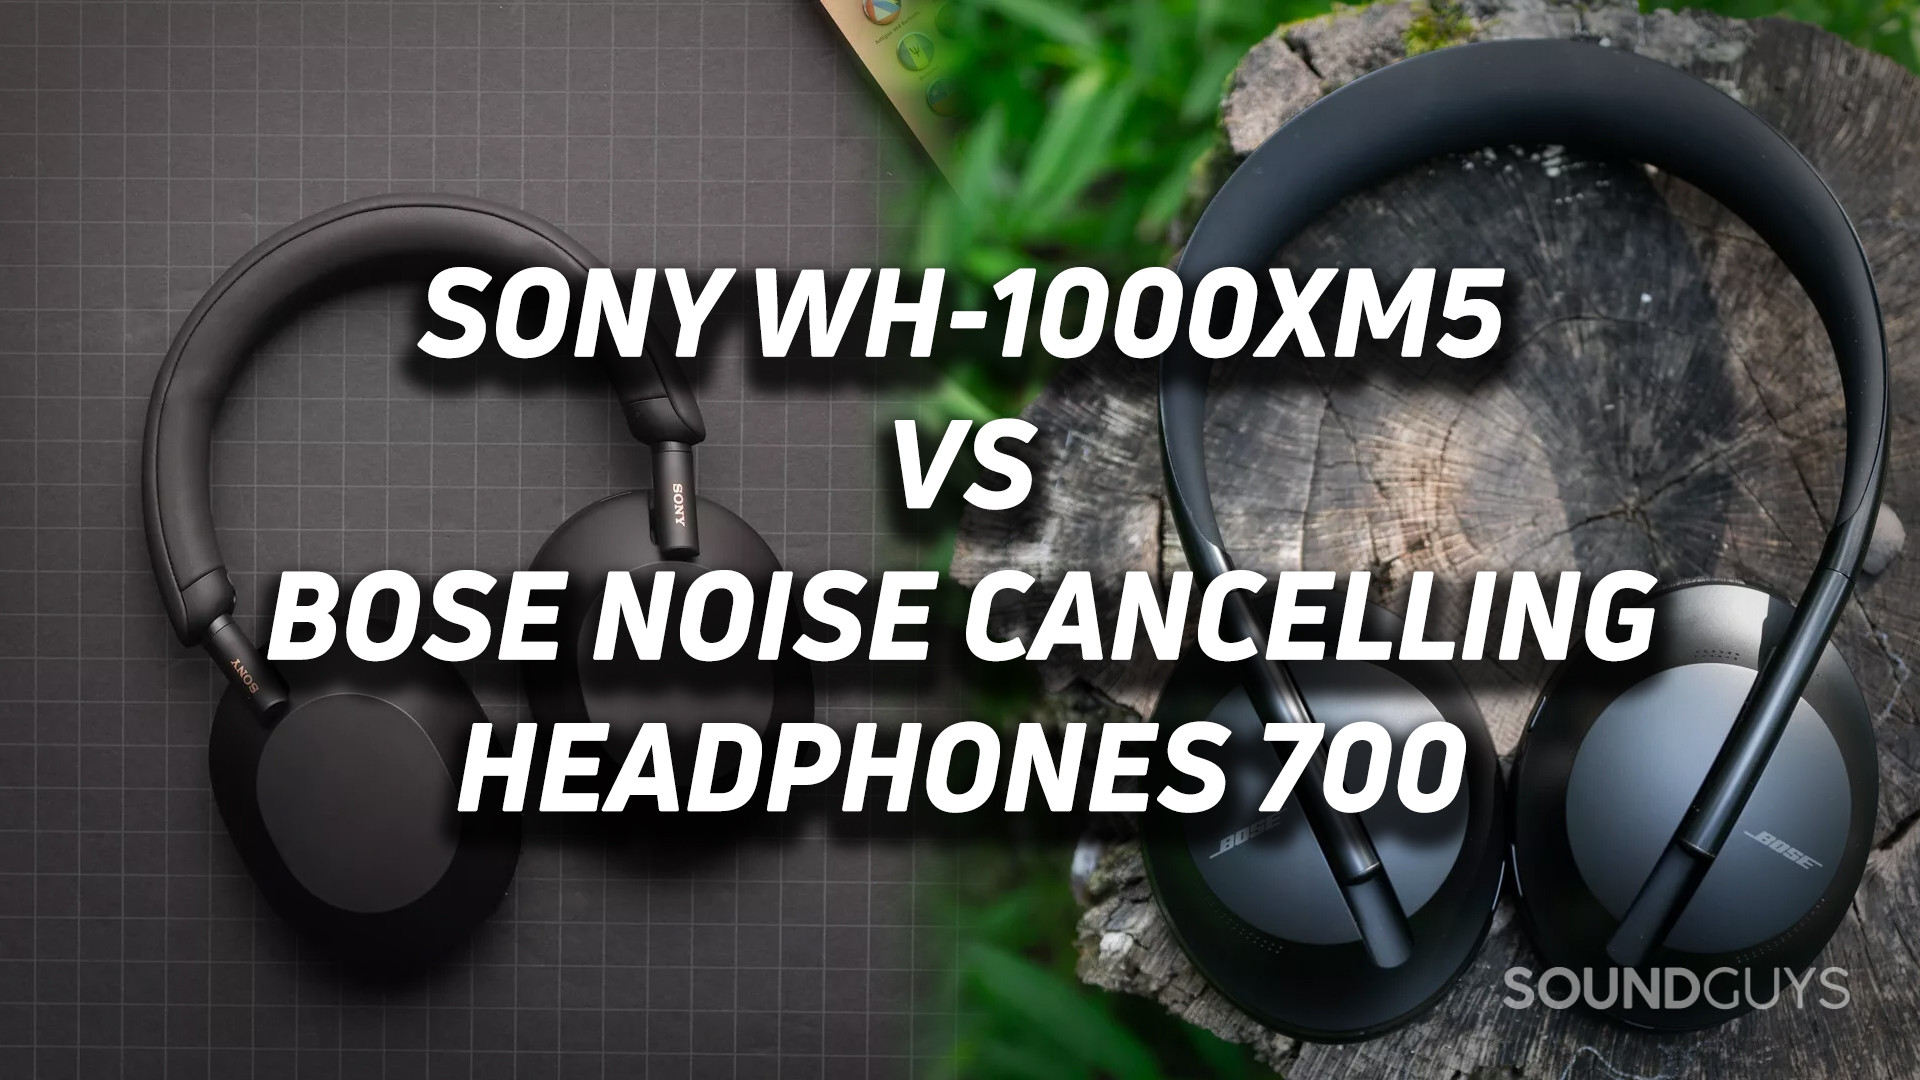 Sony WH-1000XM5 vs Bose Noise Cancelling Headphones 700 - SoundGuys